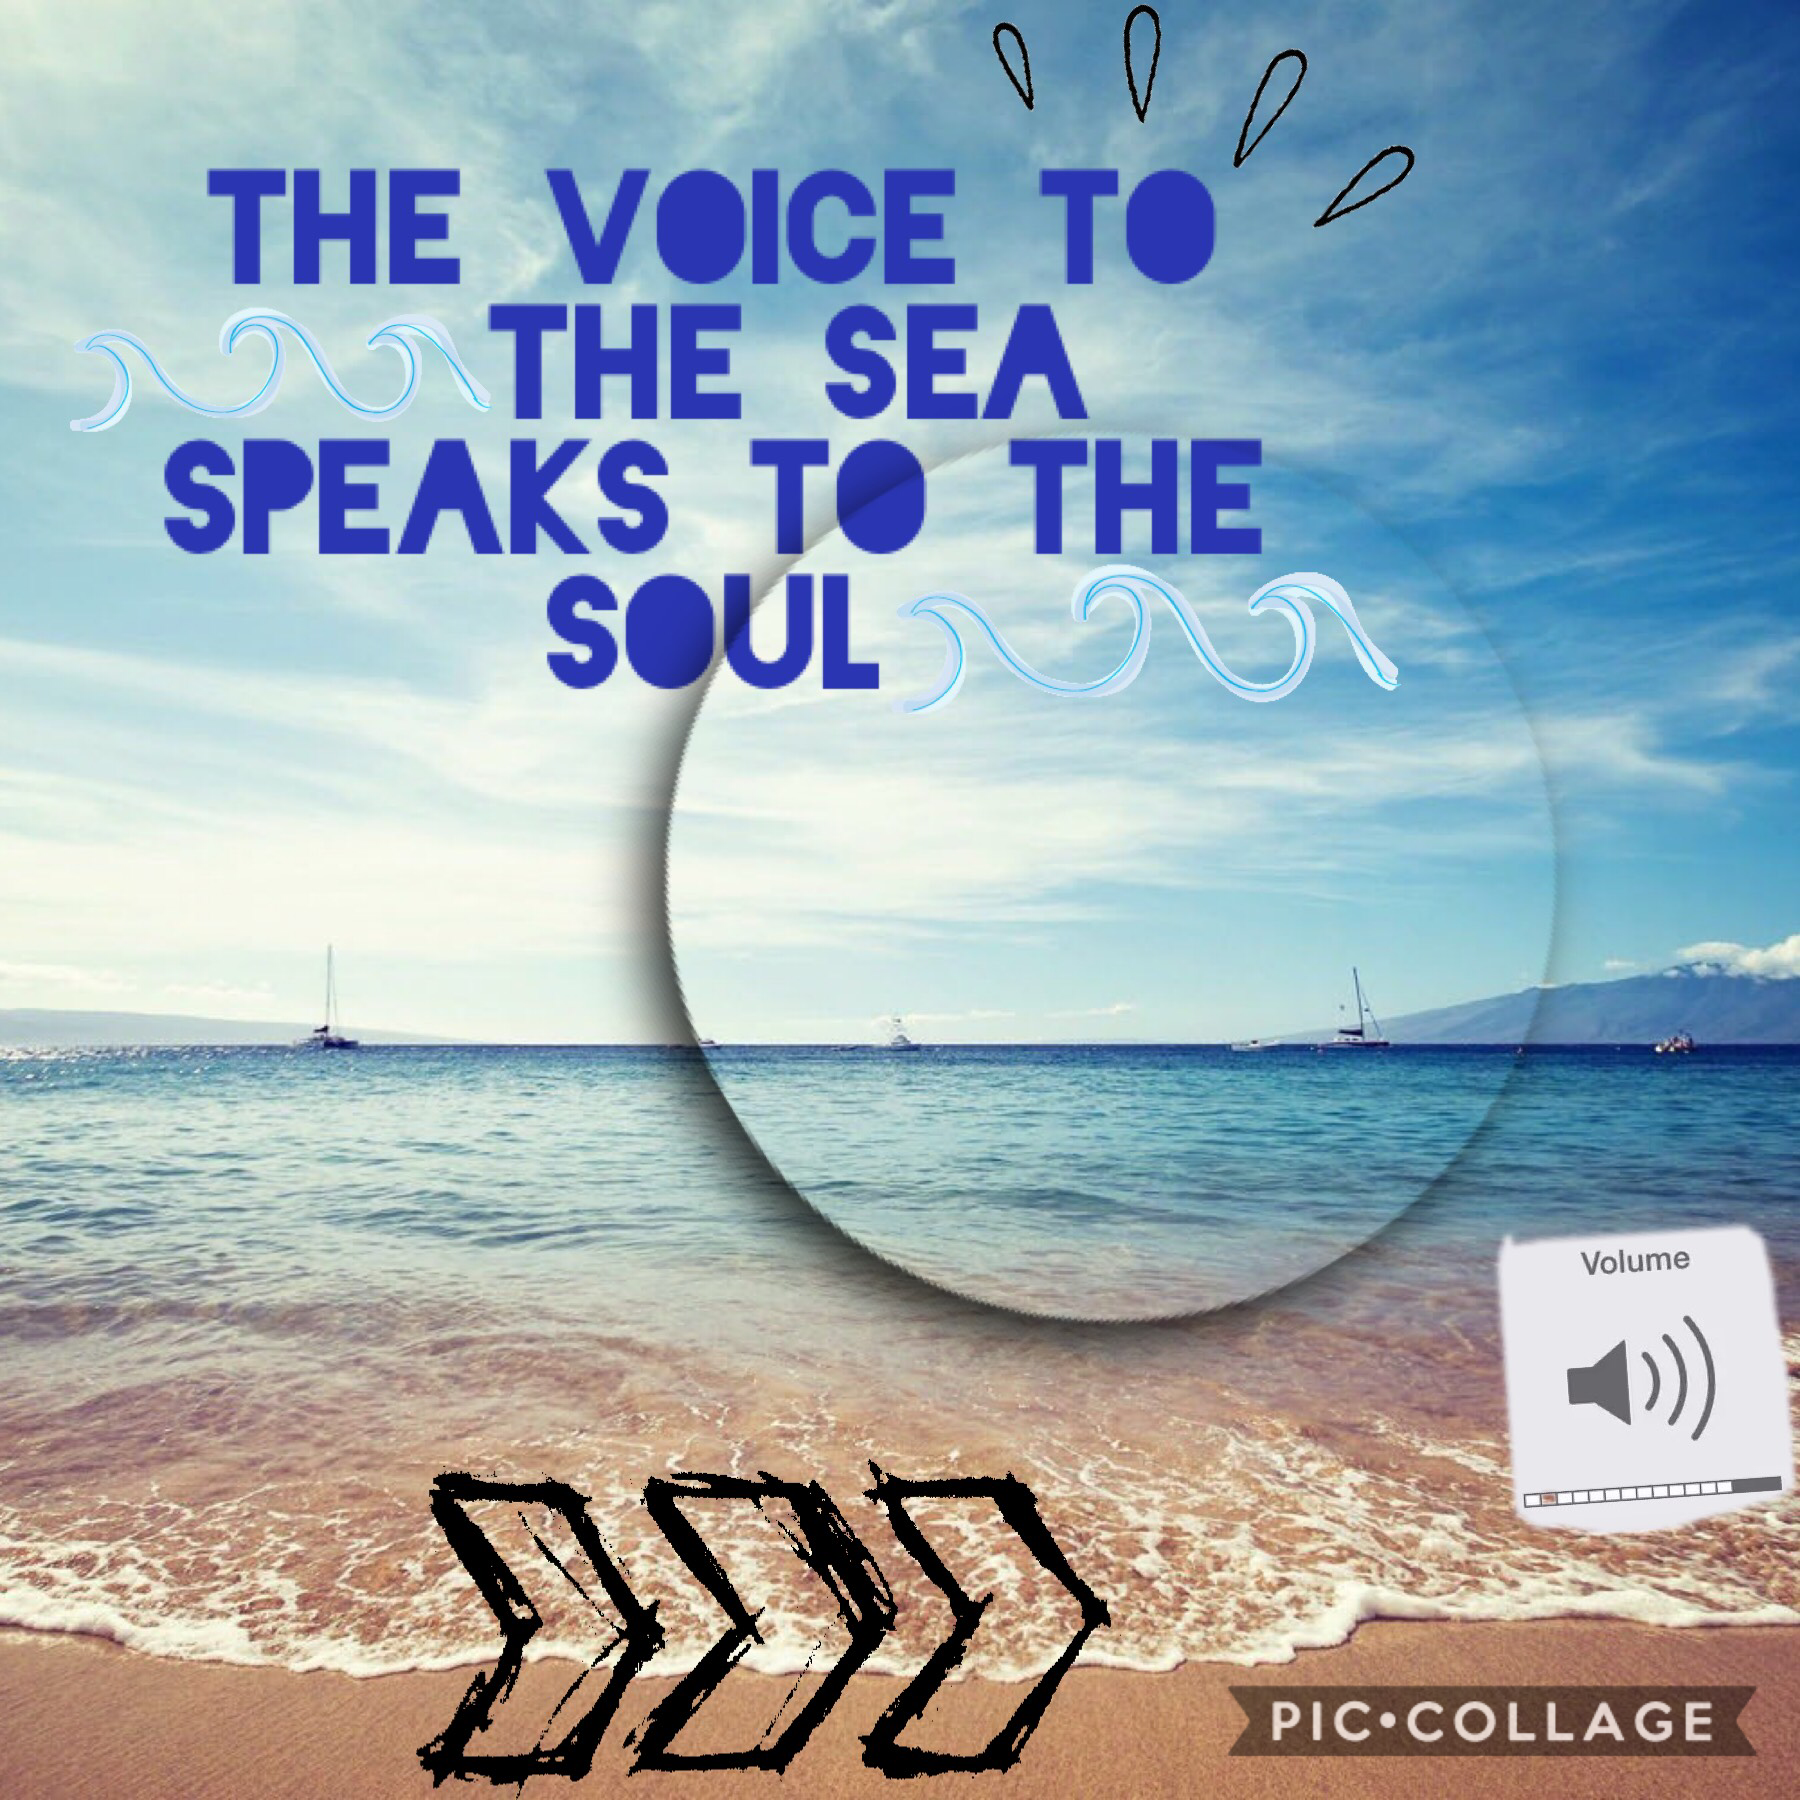 Sea soul 